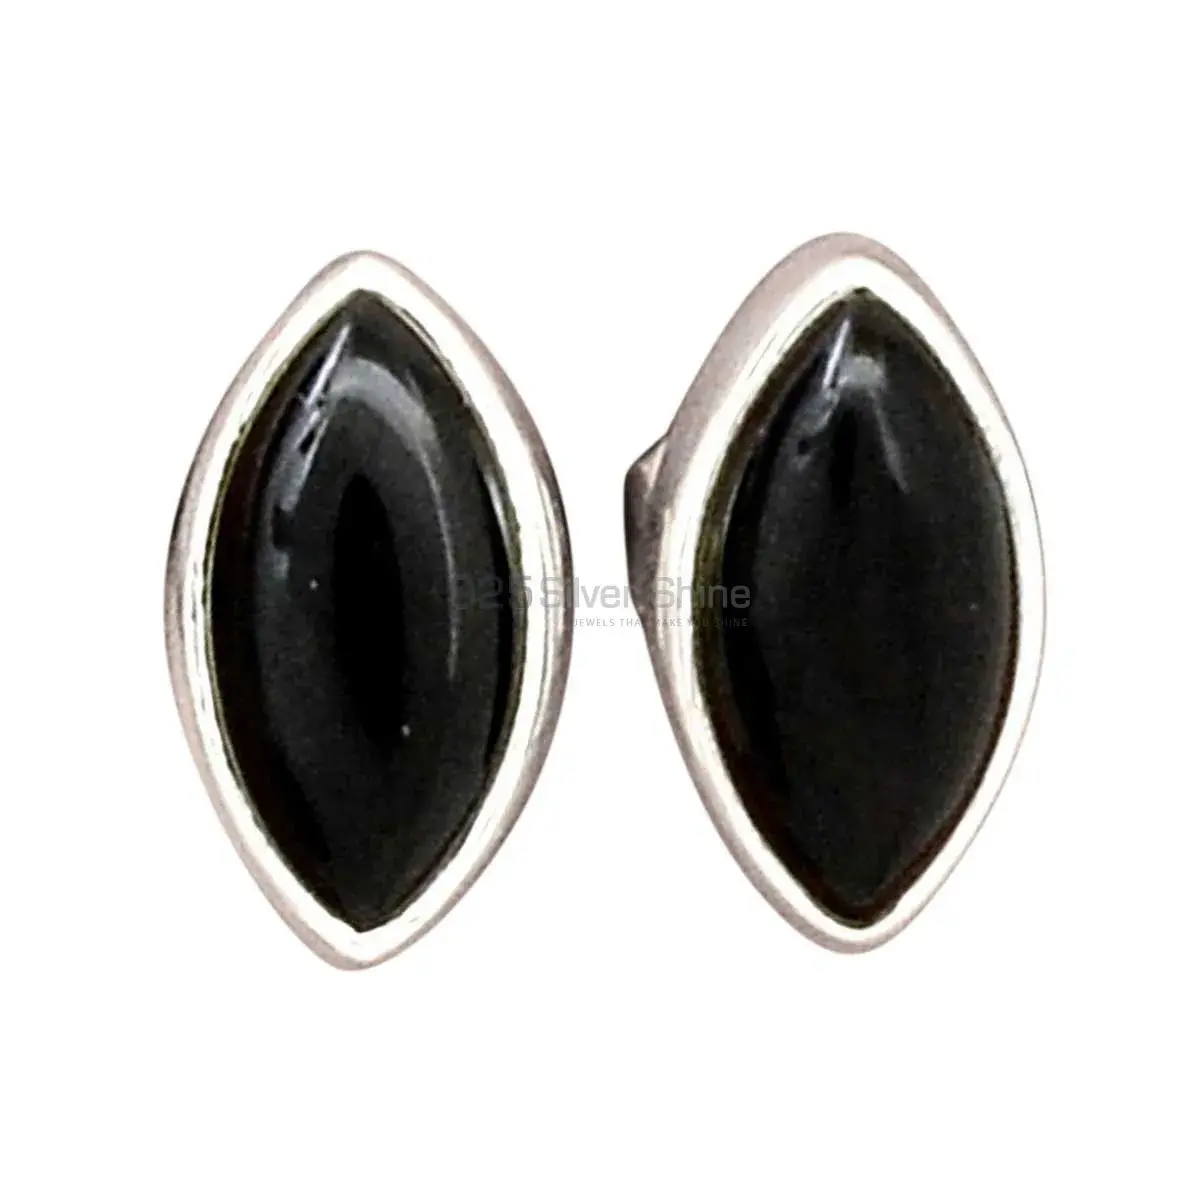 Best Design 925 Sterling Silver Handmade Earrings Exporters In Black Onyx Gemstone Jewelry 925SE2709_1